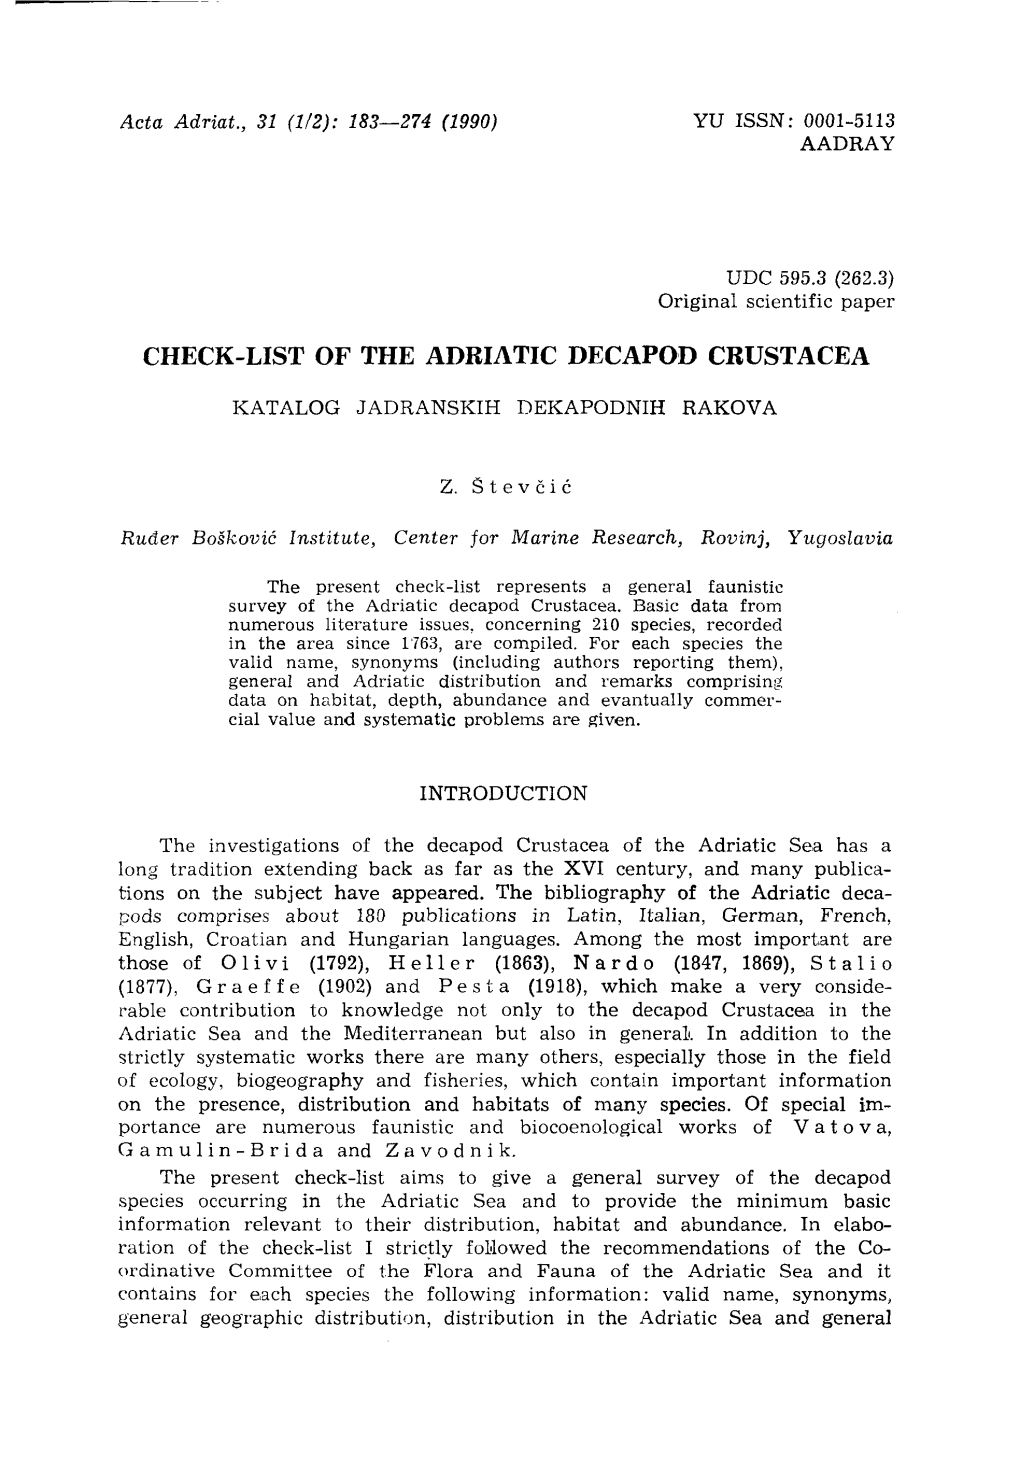 Check-List of the Adriatic Decapod Crustacea